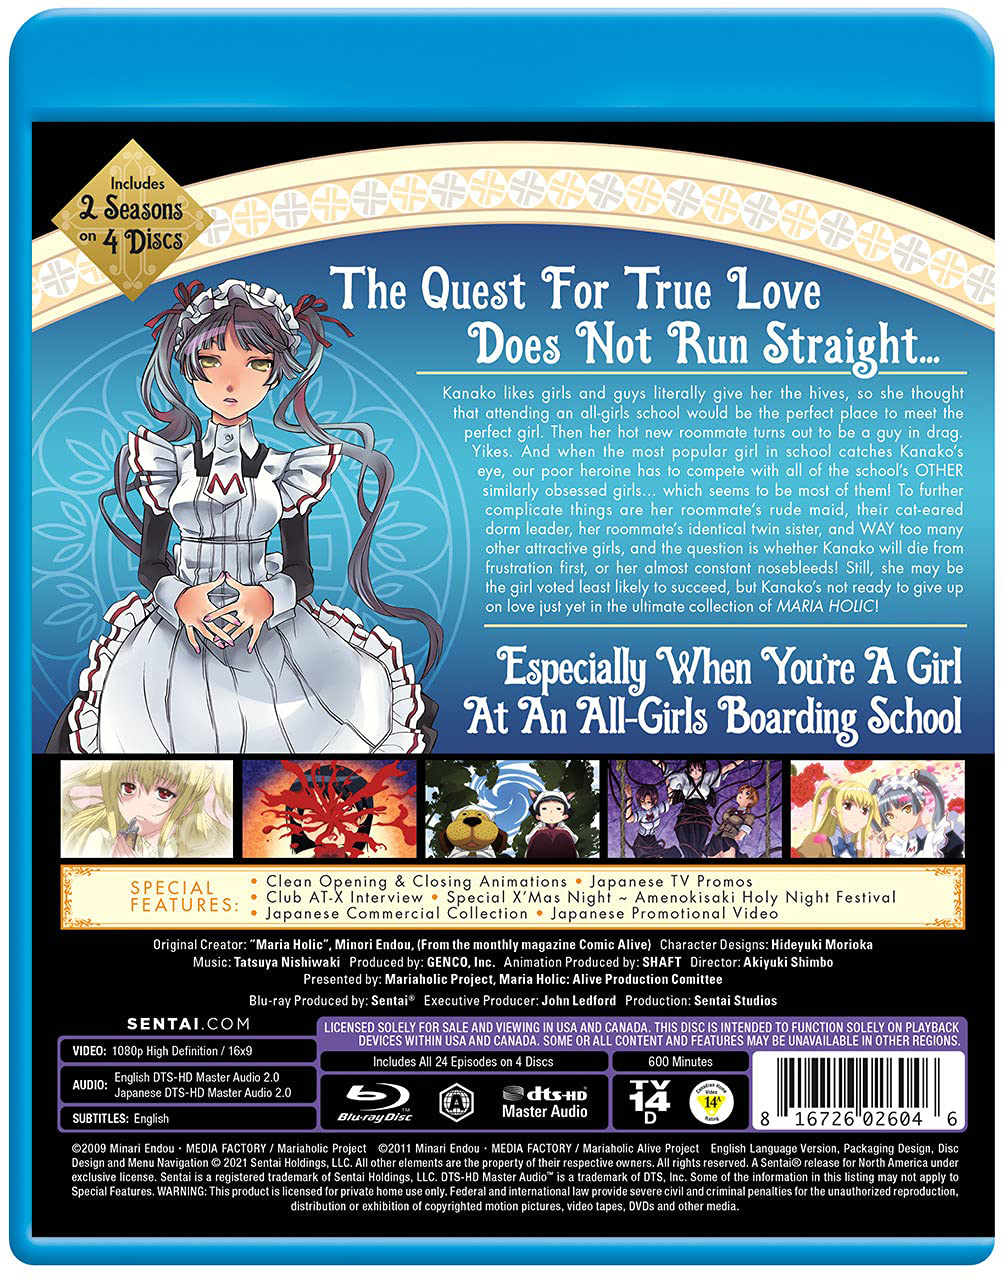 Nana (Blu-ray), Sentai, Anime & Animation